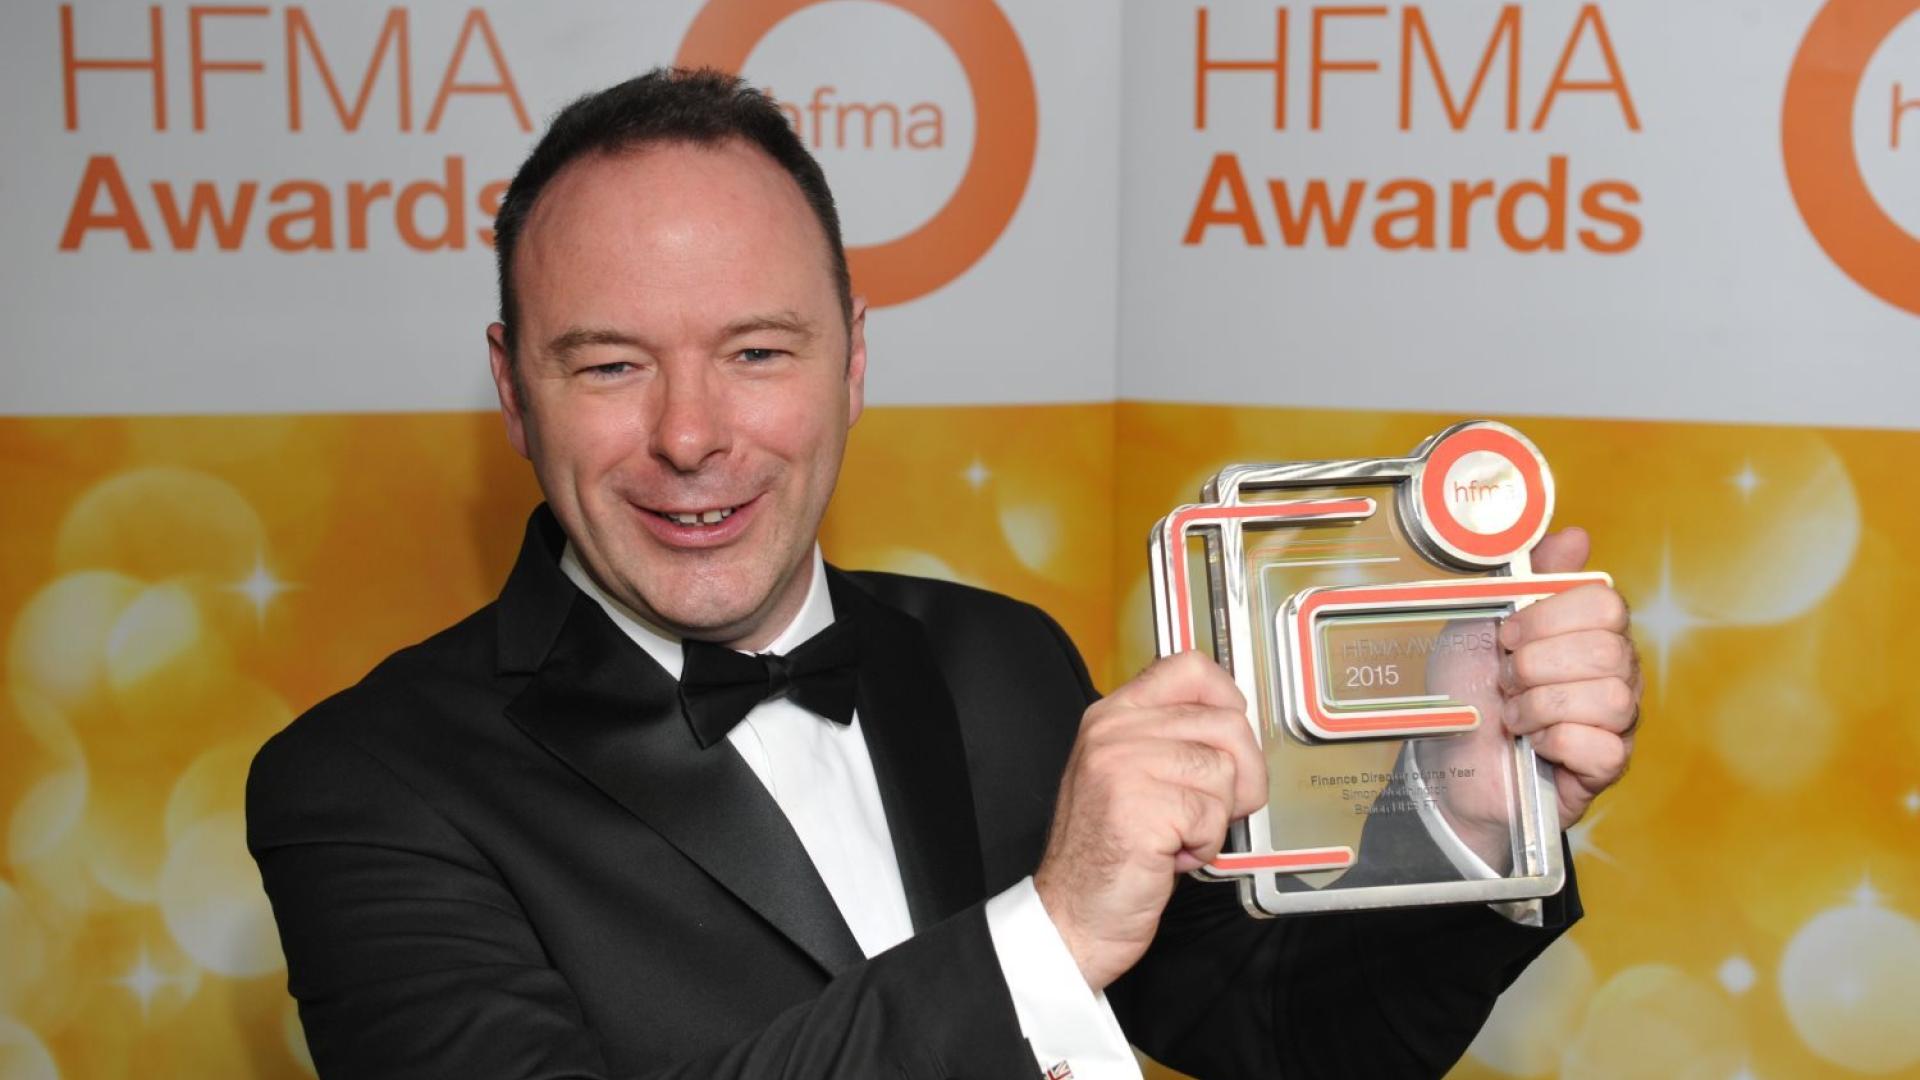 HFMA Awards finance director of the year winner 2015